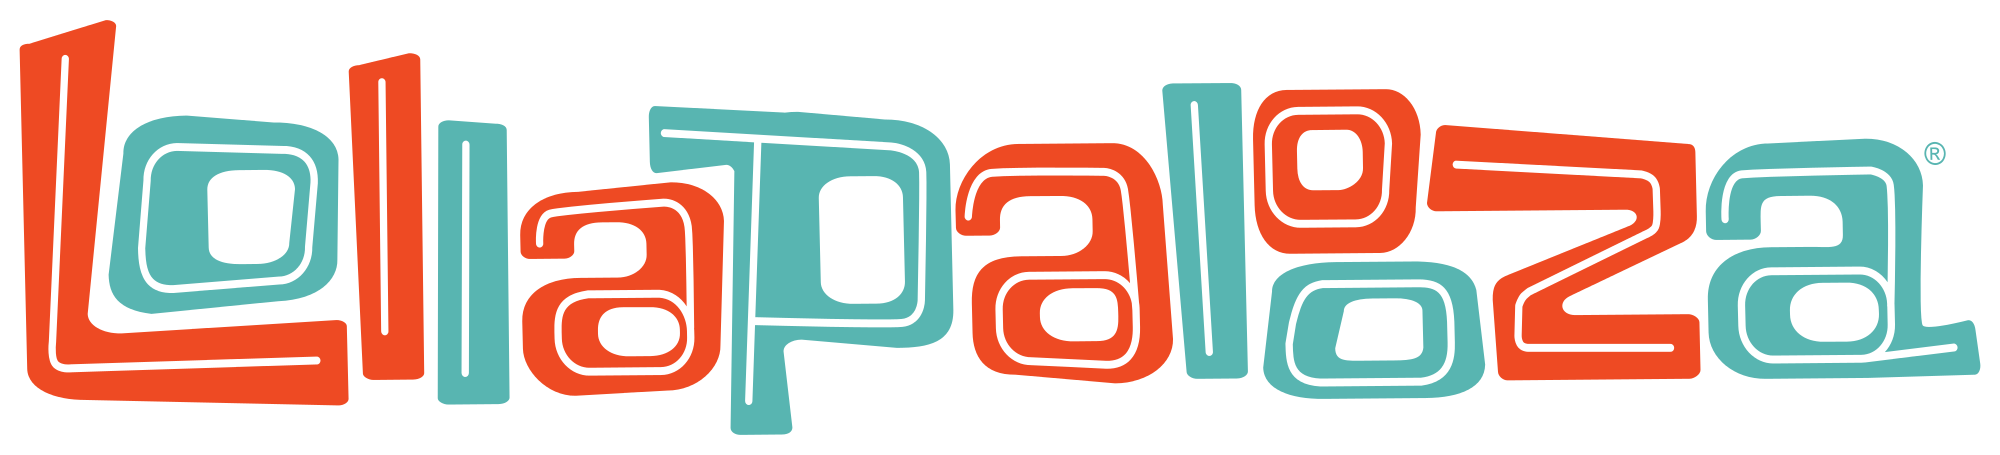 Lollapalooza_logo.svg.png